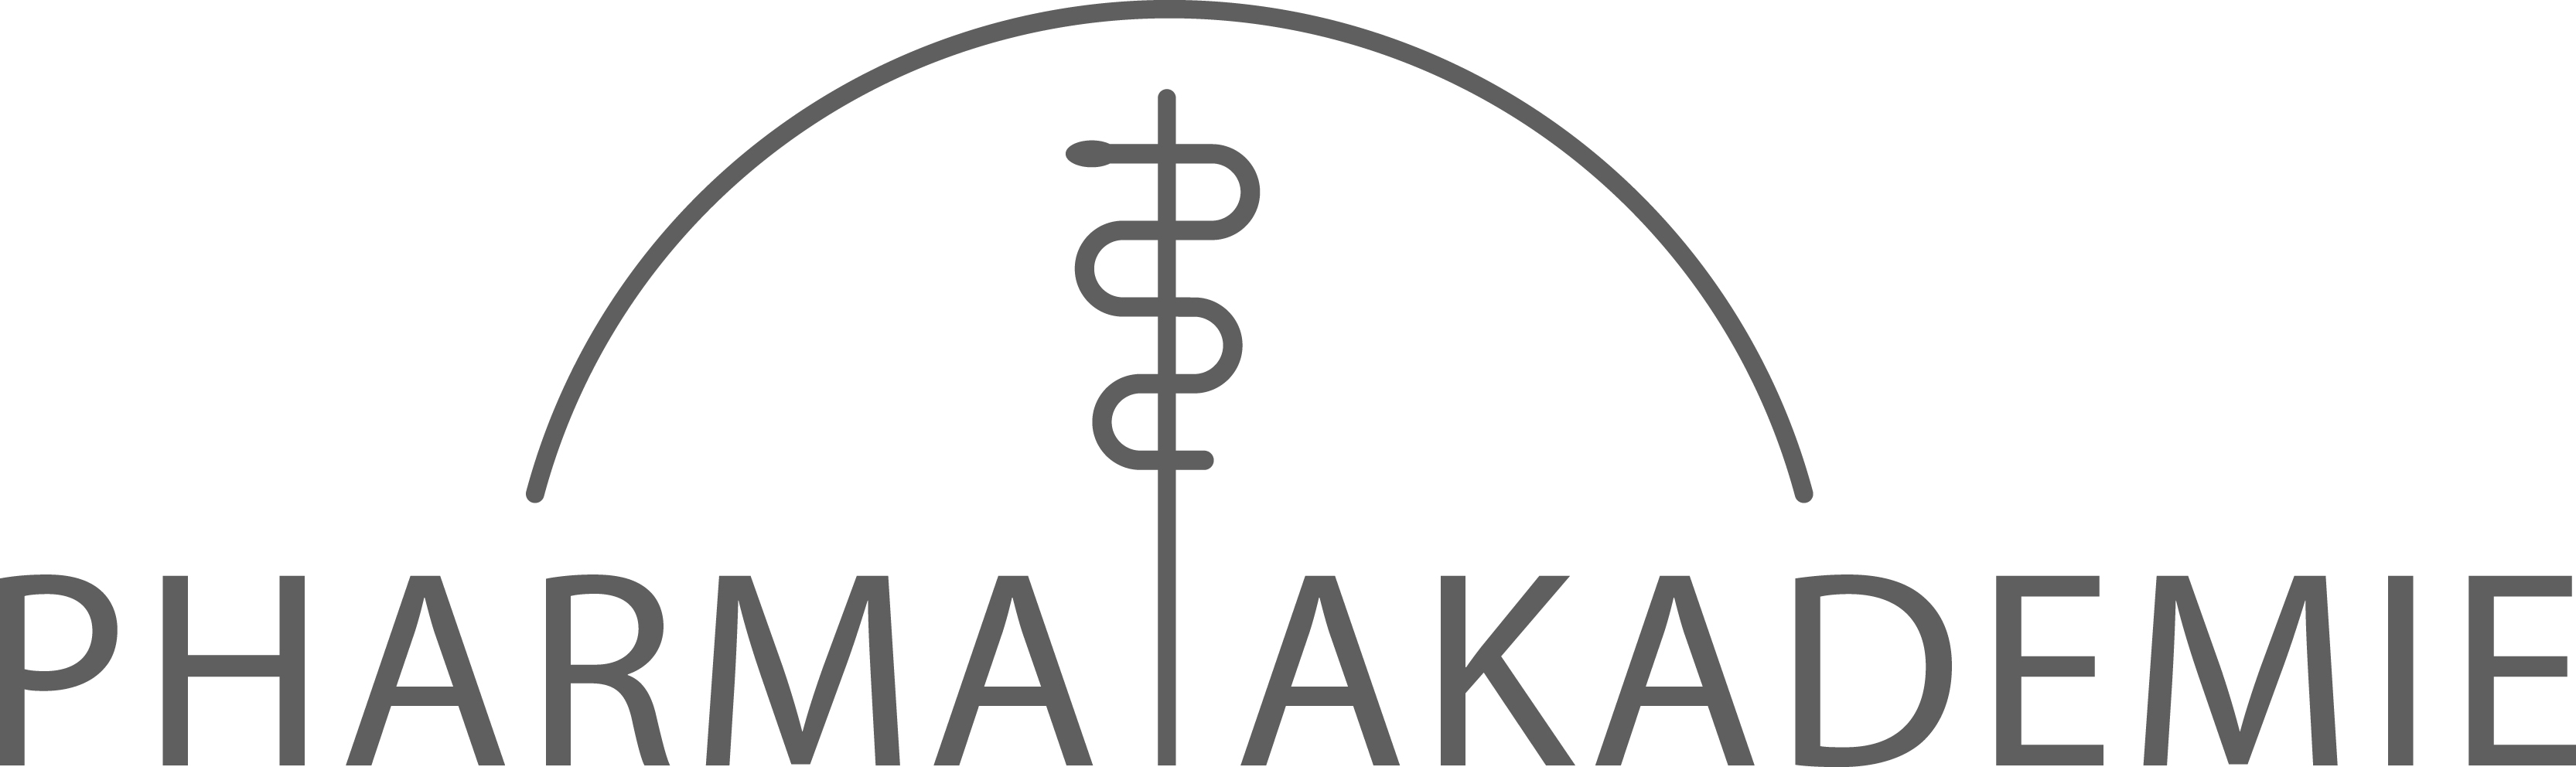 Logo Pharmakademie